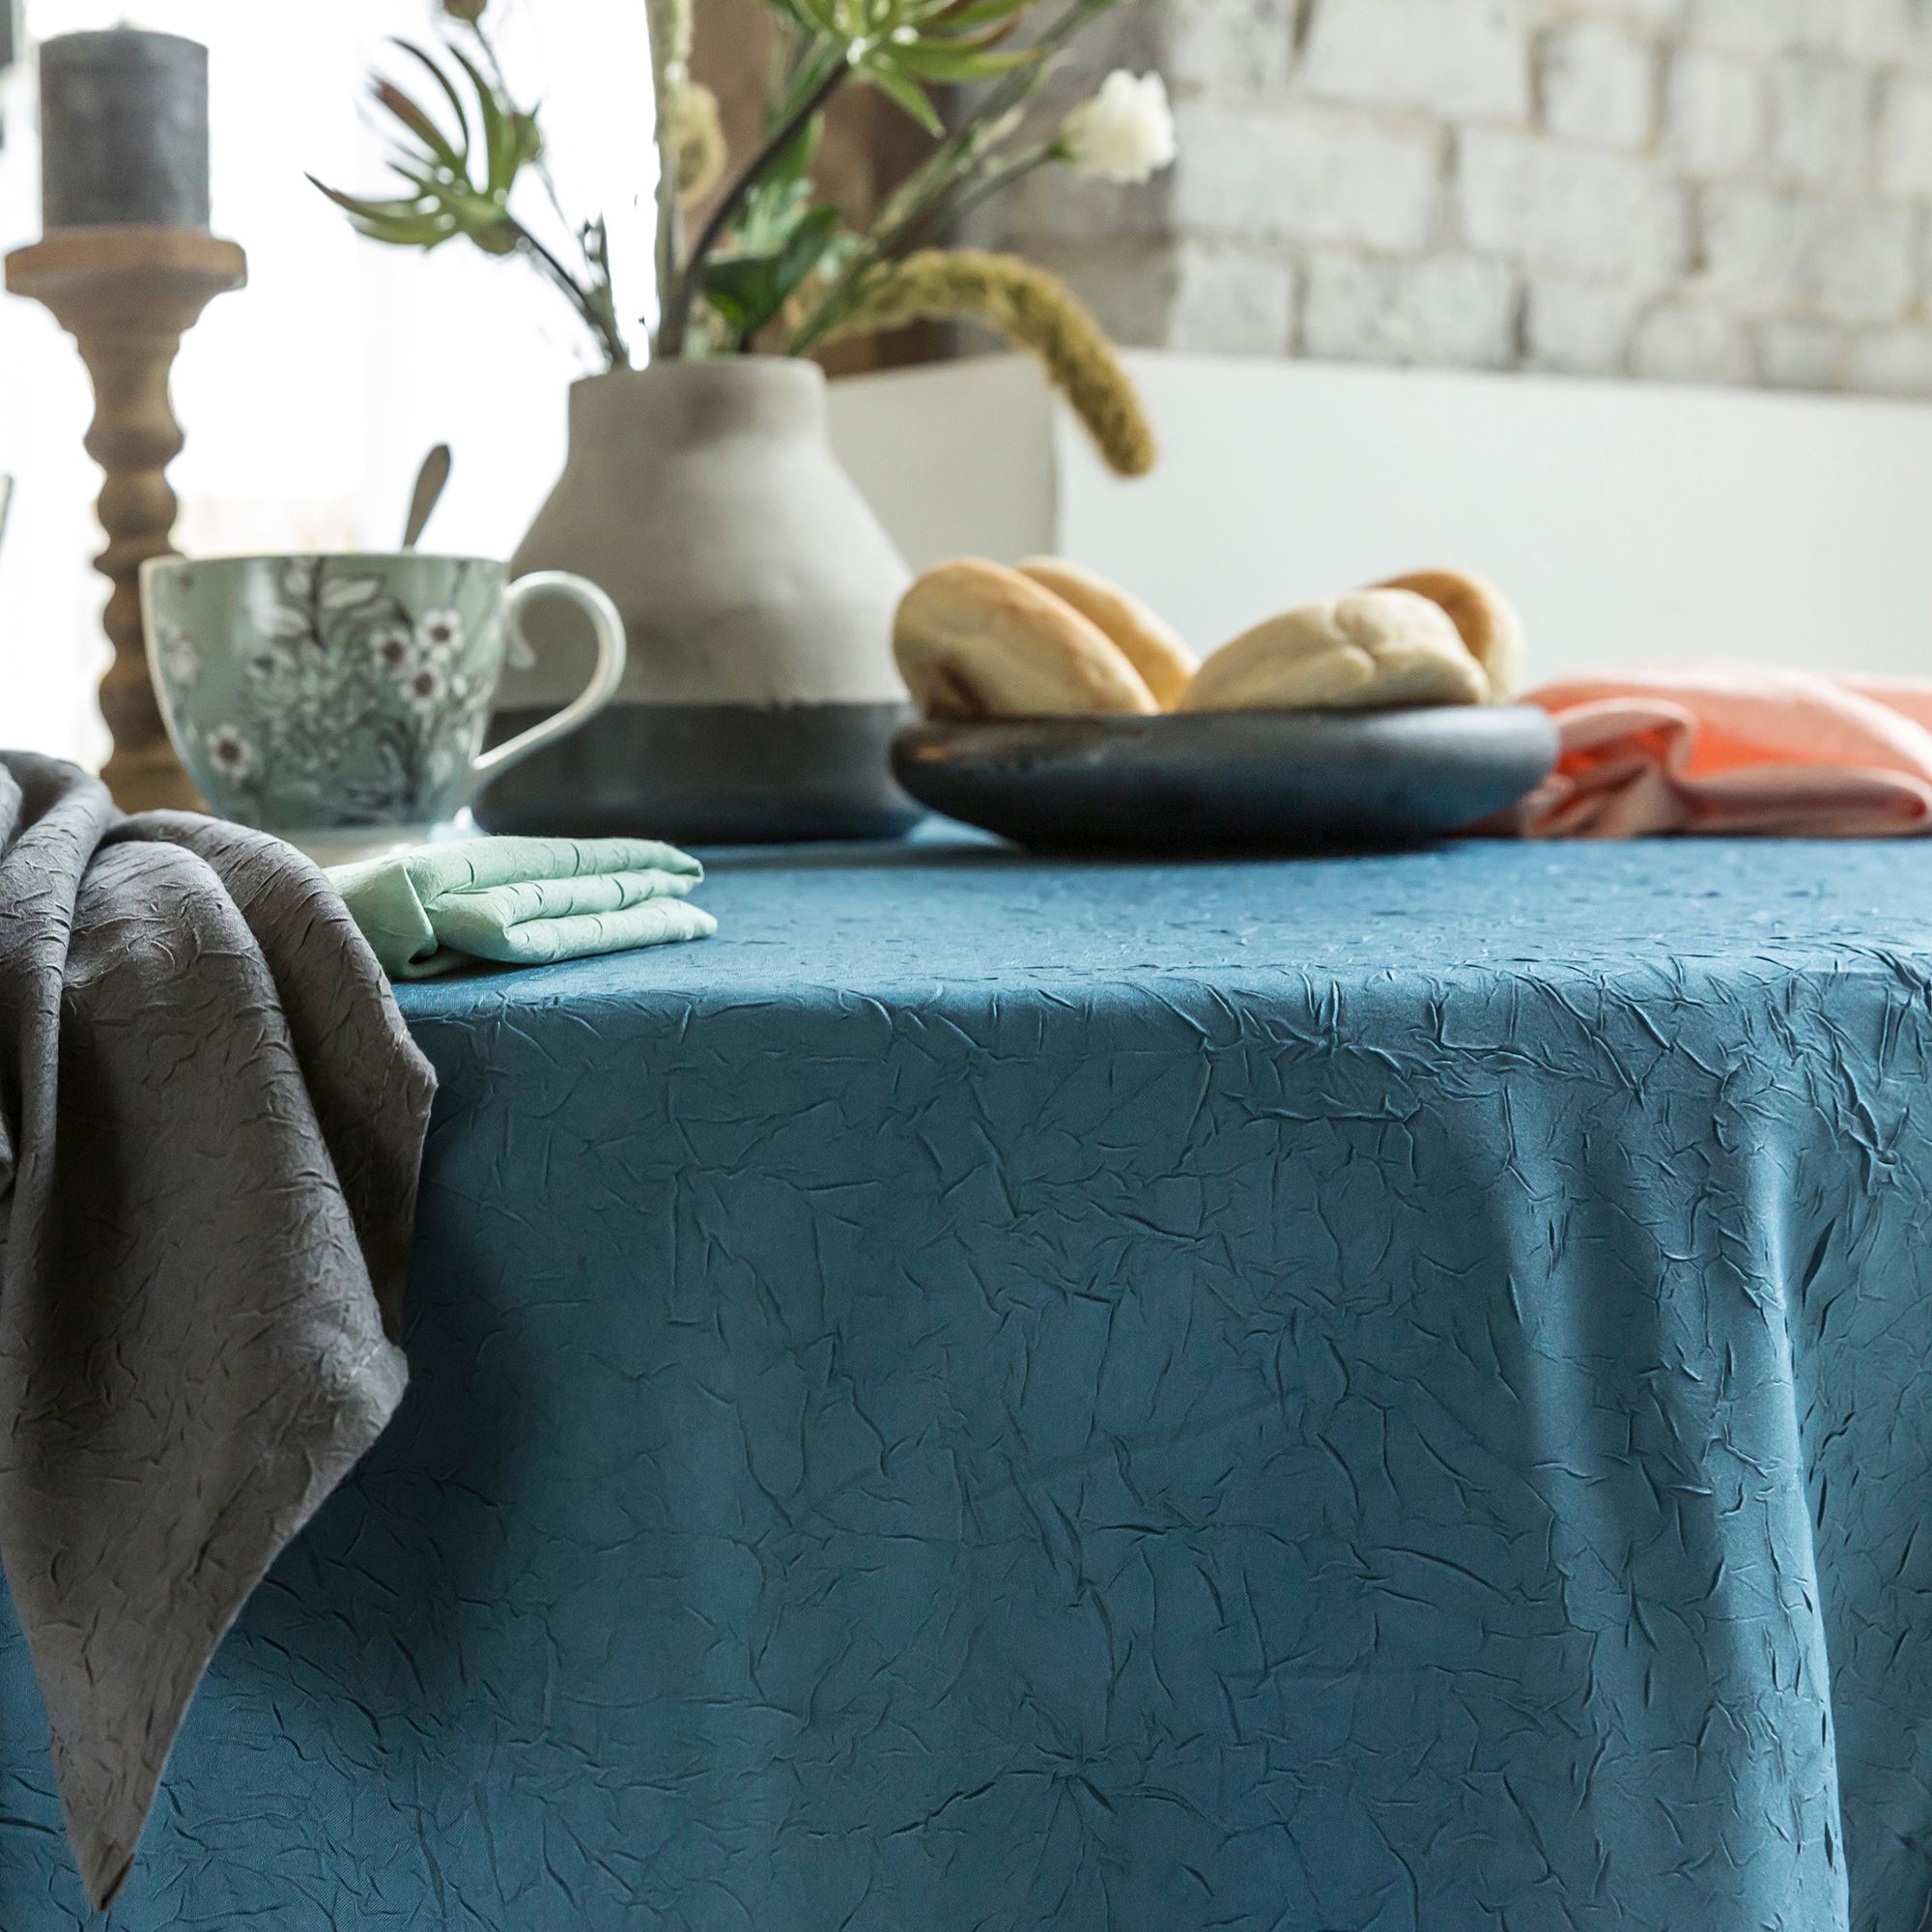 serviette de table 45x45 bleu orage en polyester